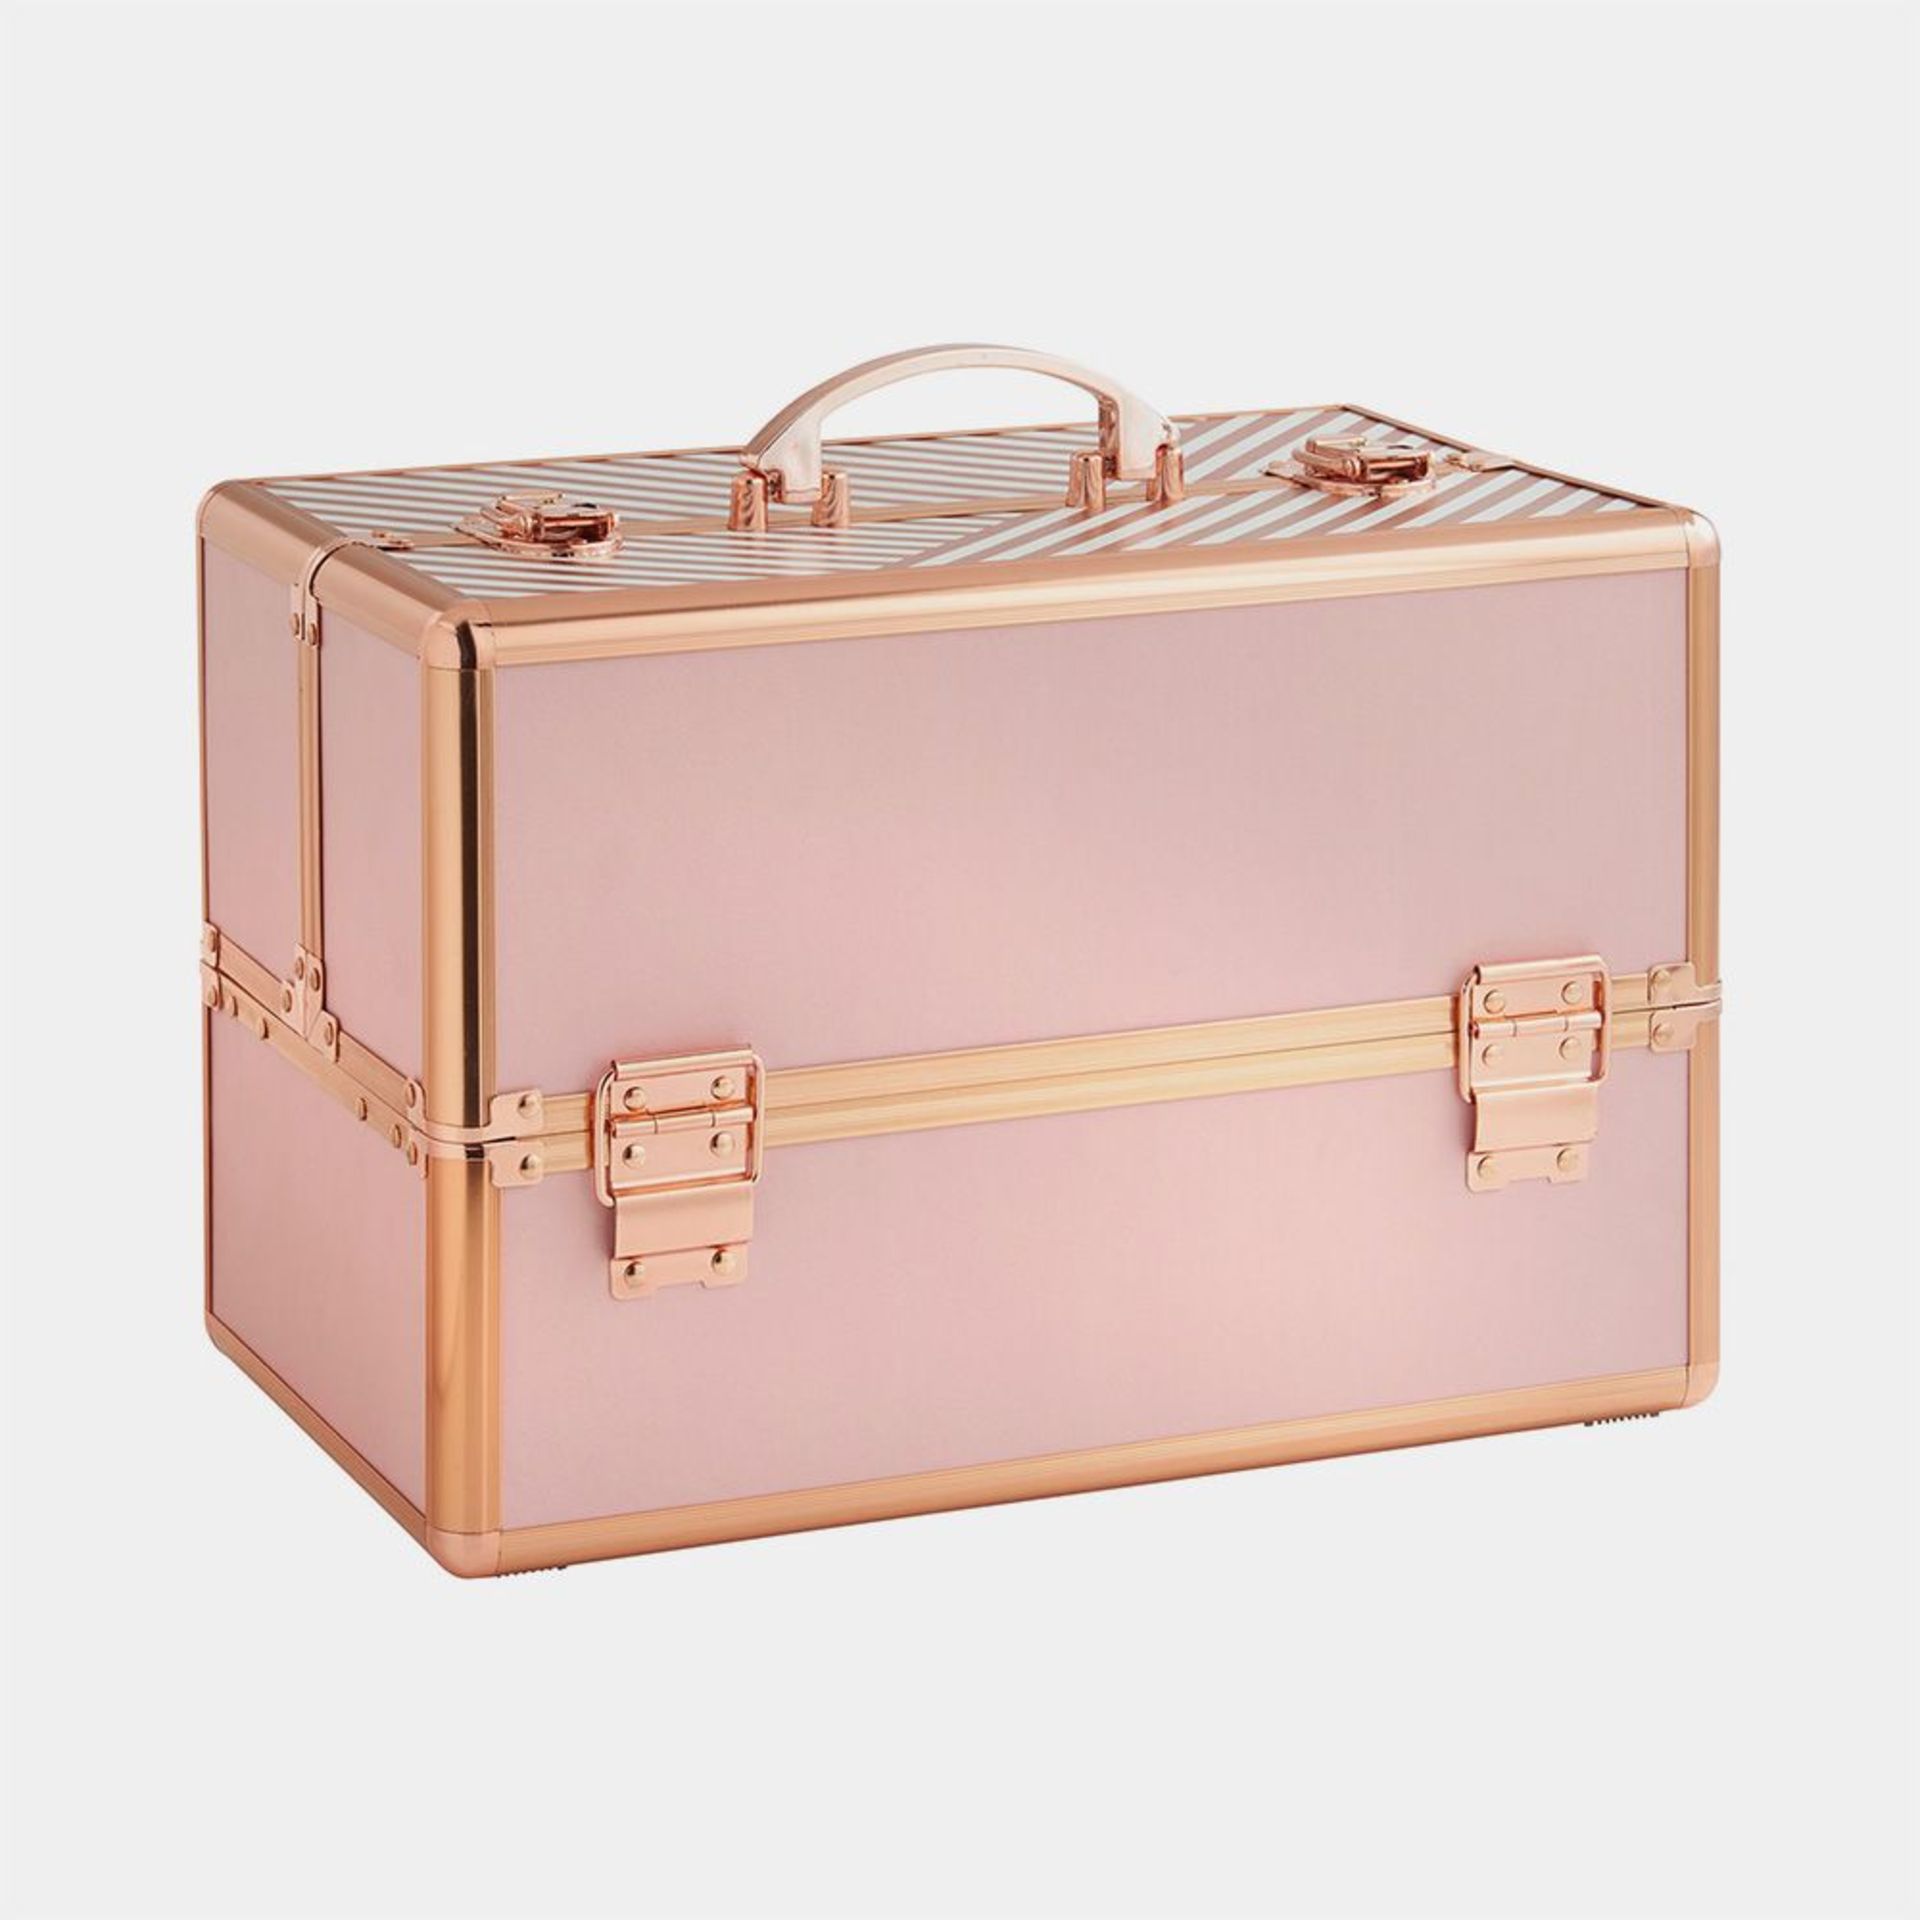 Large Blush Pink Makeup Case. - BI. An amazing choice for professional salons, makeup artists and